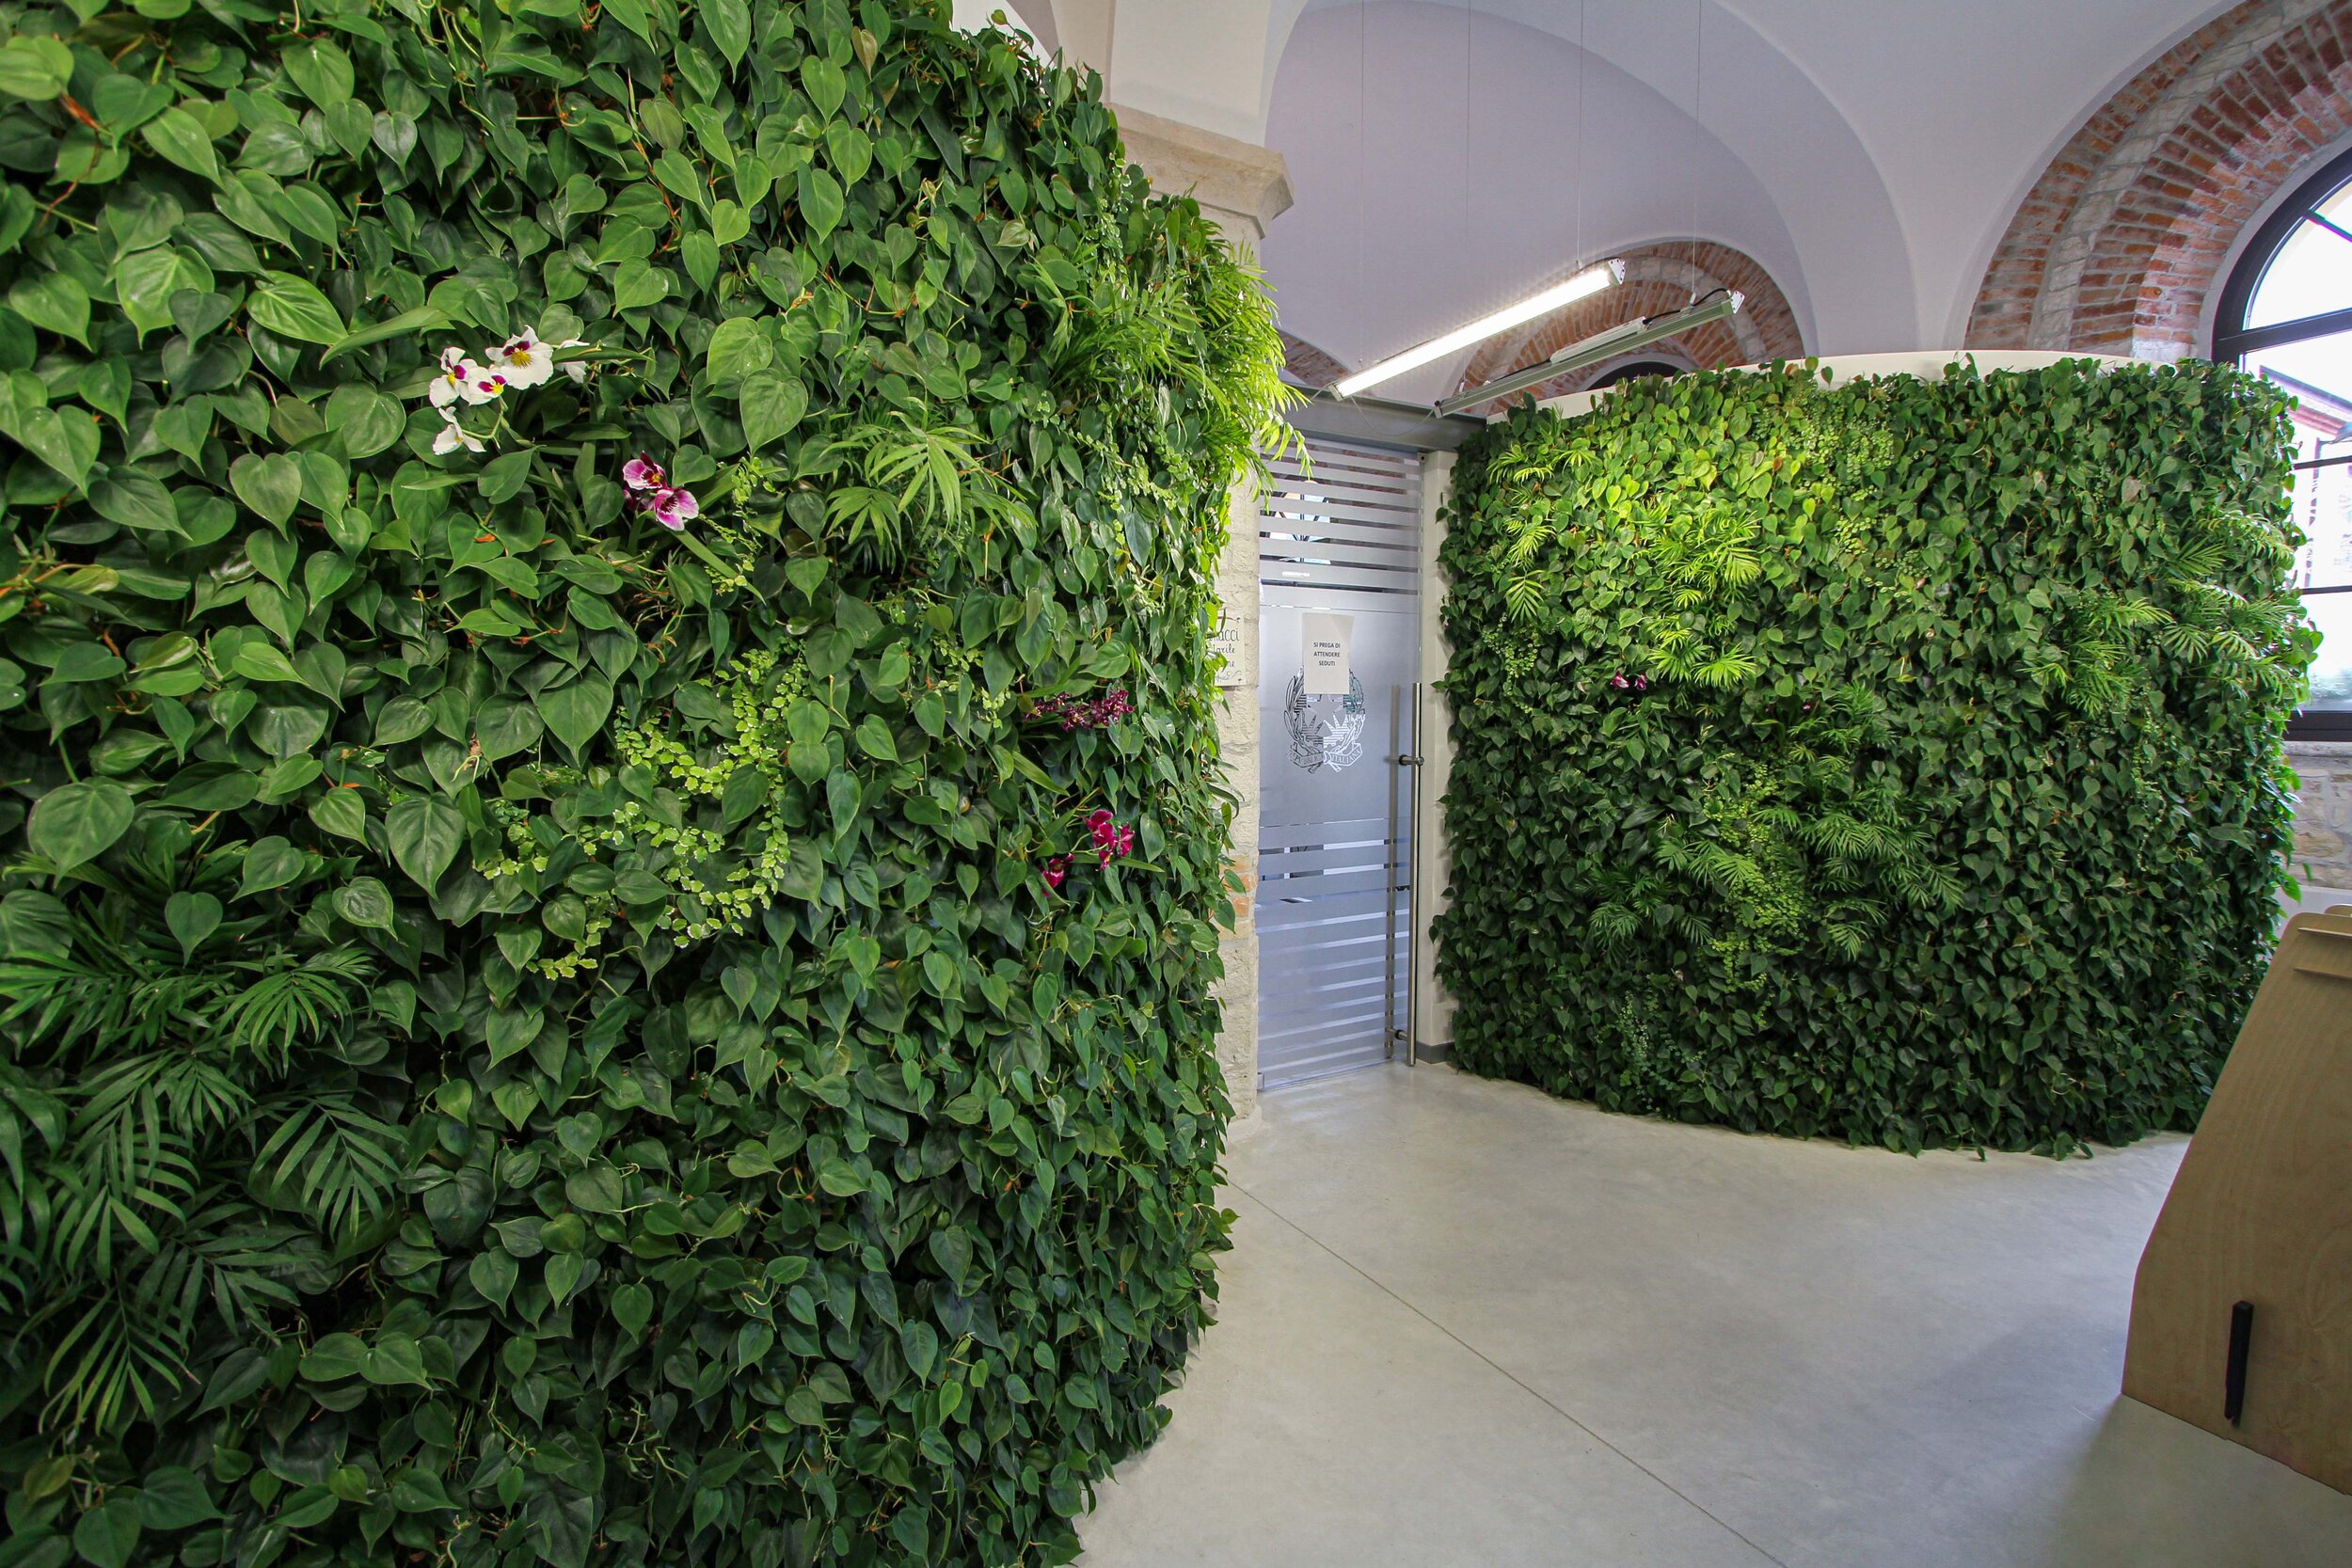 villanacci-garden-vertical-wall-green-sundar-italia-012.jpg